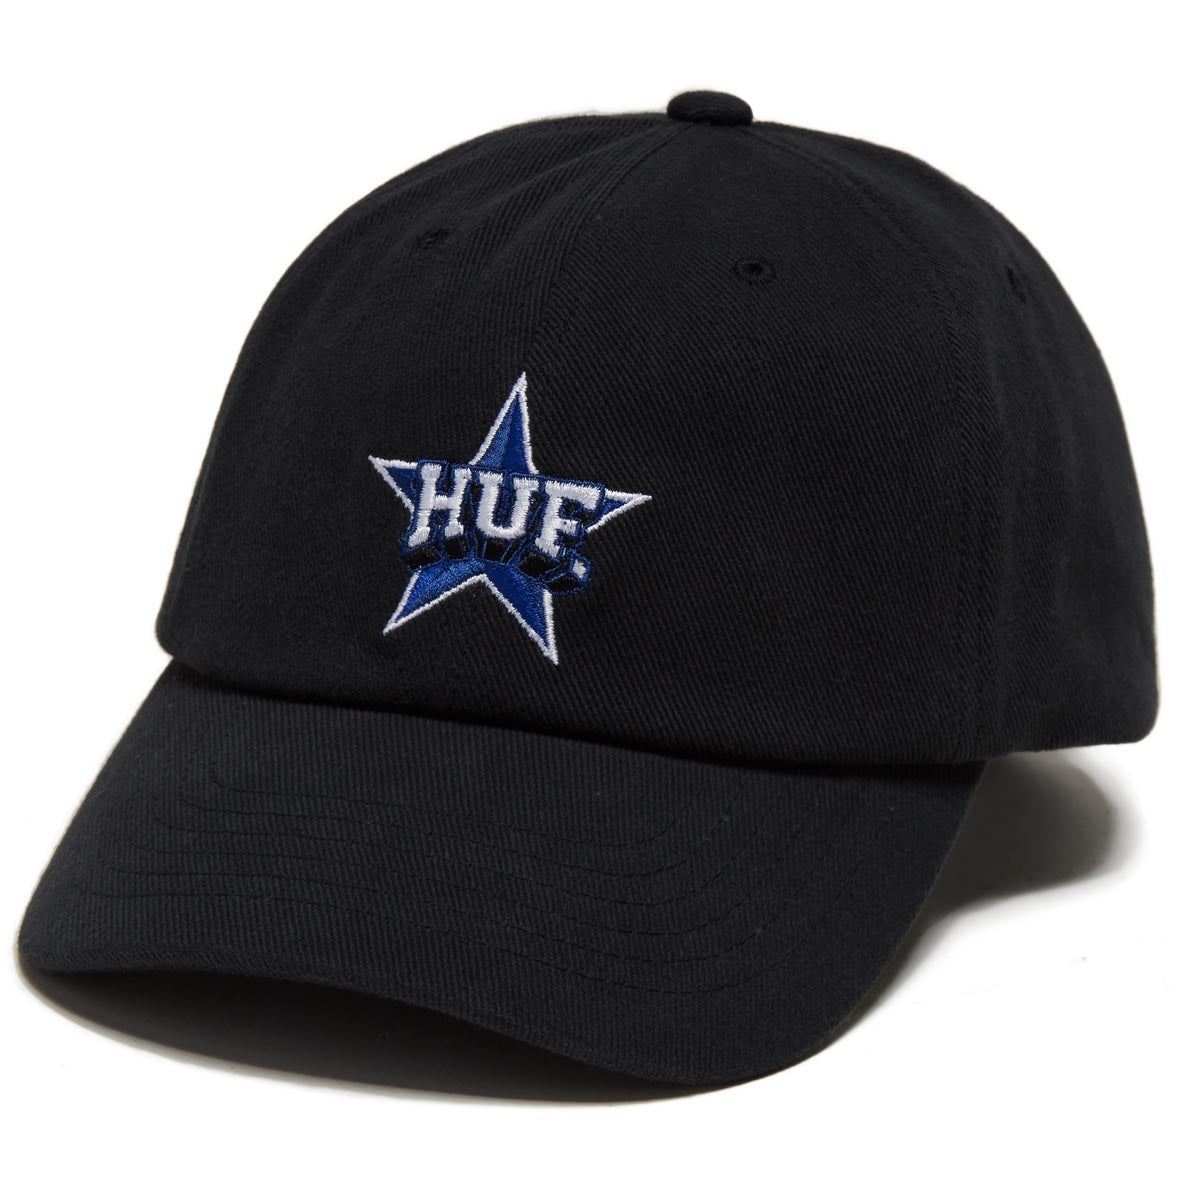 HUF All Star 6 Panel CV Hat - Black image 1